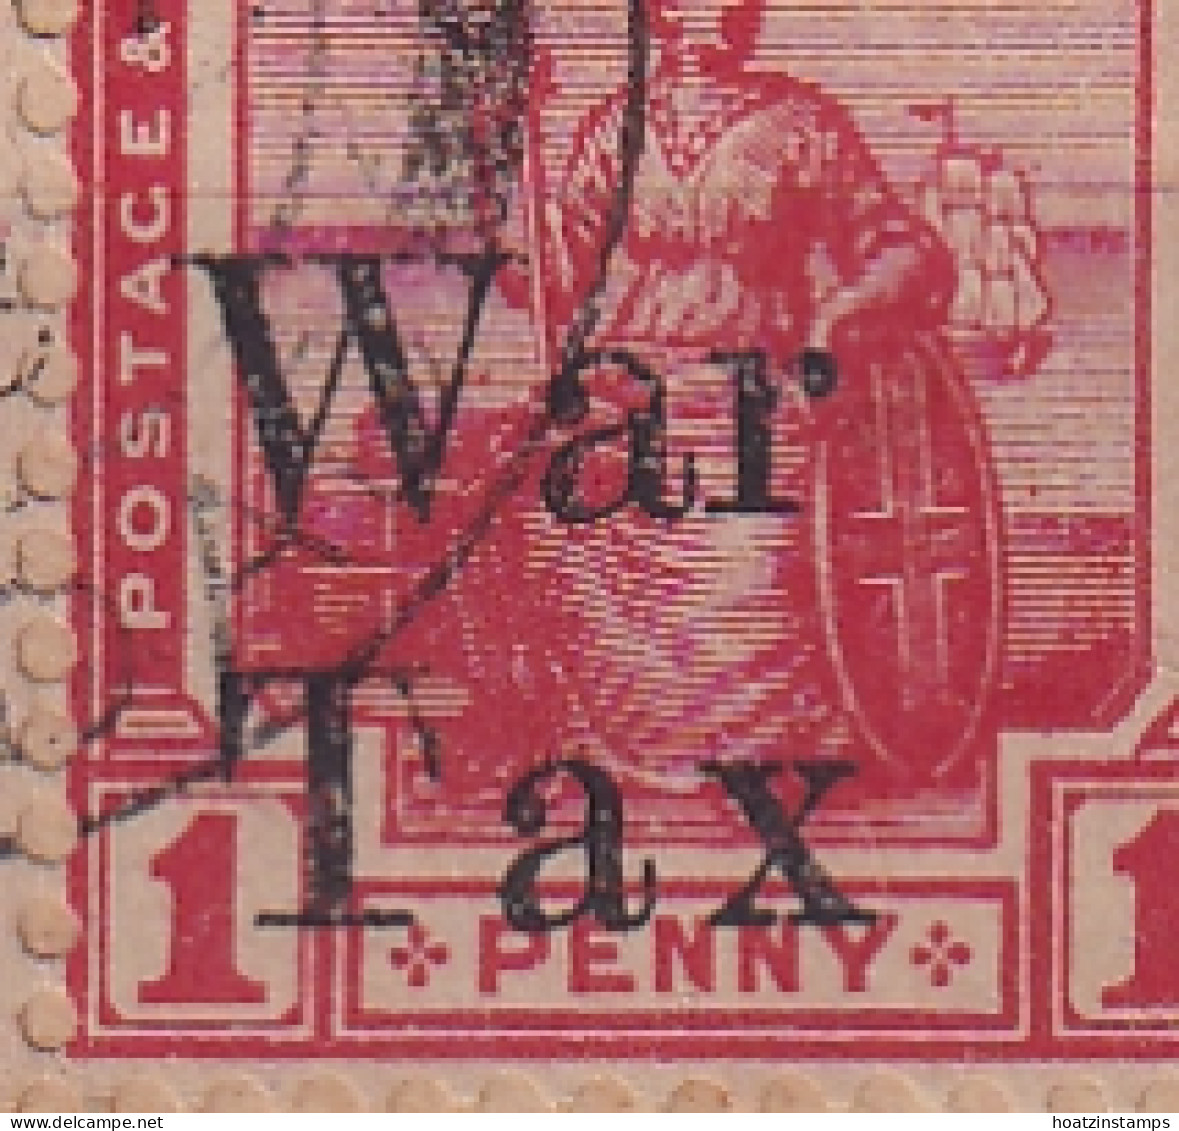 Trinidad & Tobago: 1918   Britannia 'War Tax' OVPT    SG189    1d   ['Tax' Spaced]     Used Pair On Piece - Trindad & Tobago (...-1961)